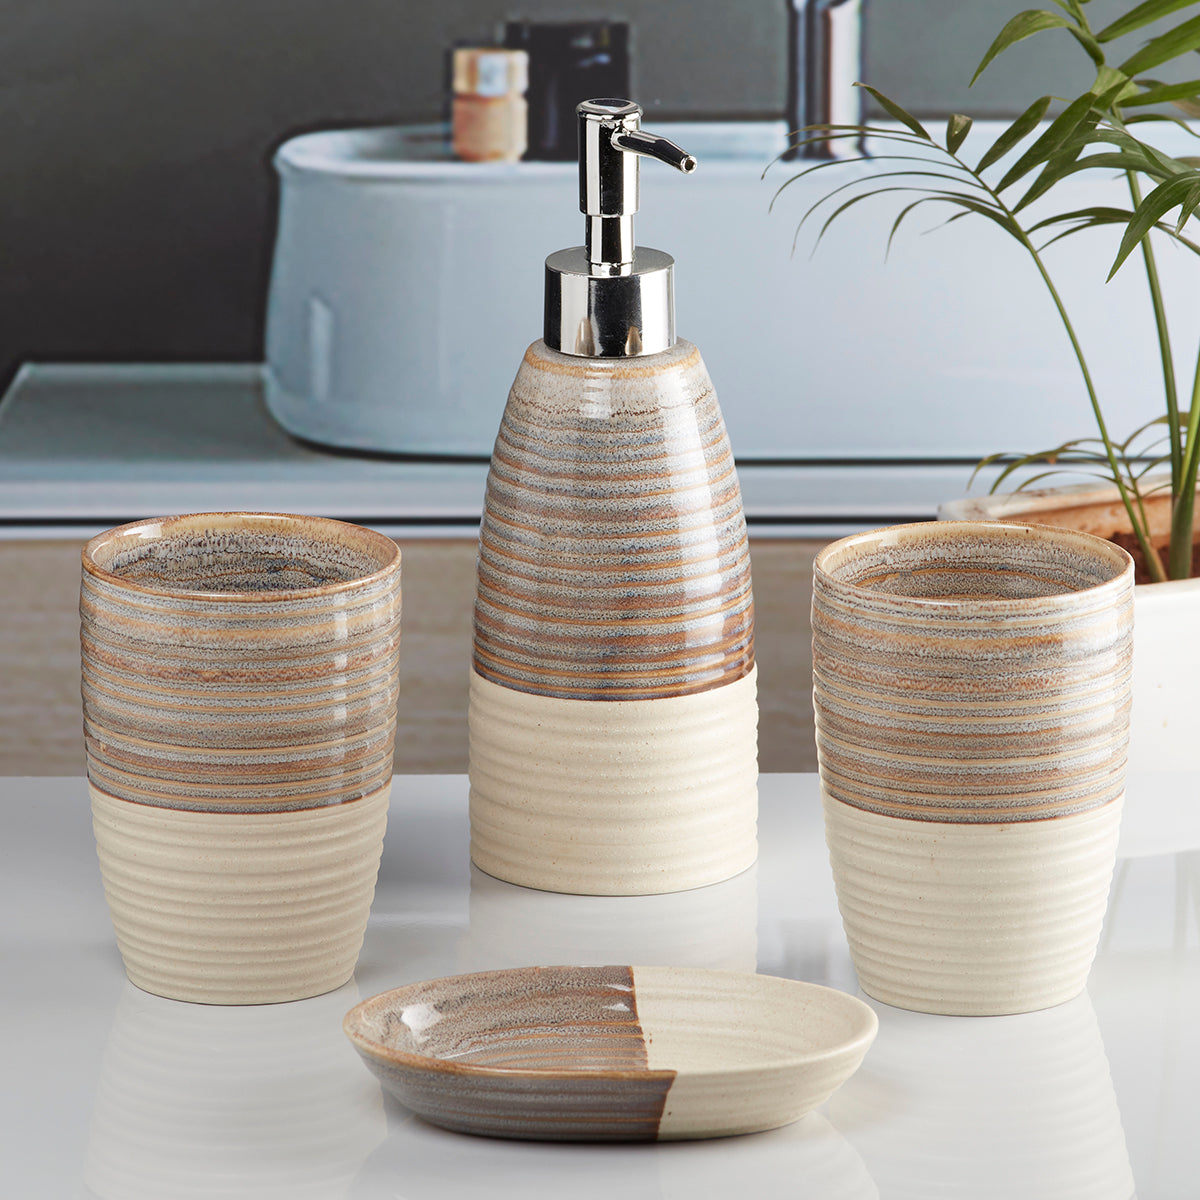 Ceramic Bathroom Accessories Set of 4 Bath Set with Soap Dispenser (10099)